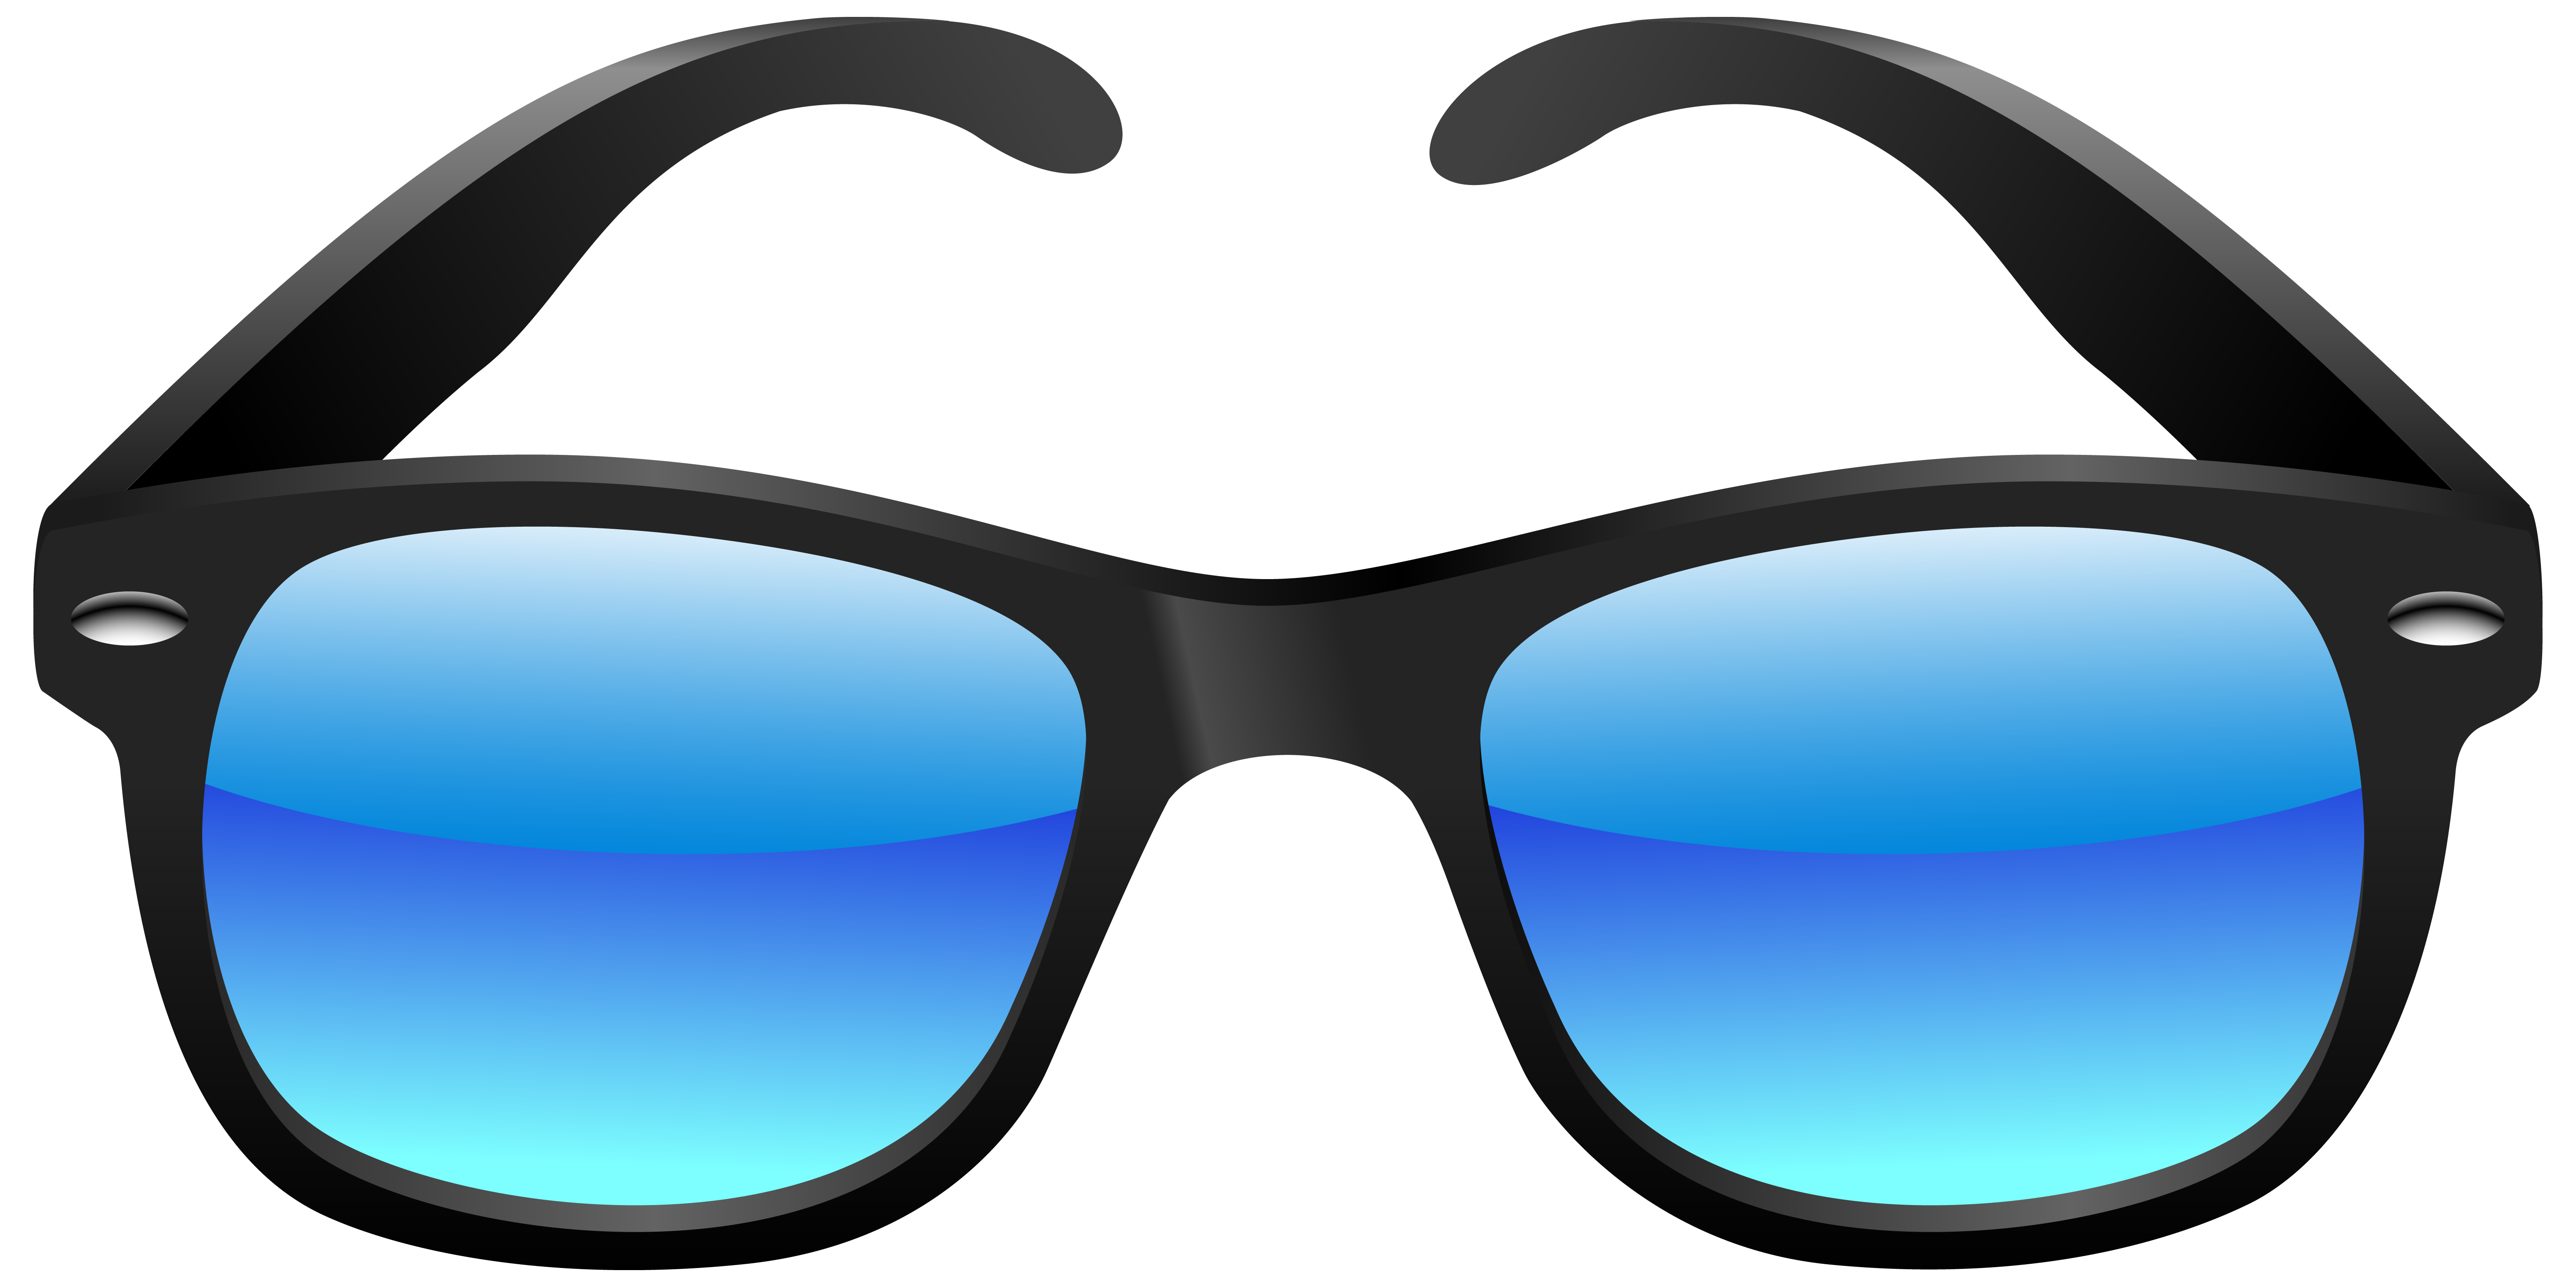 Shutter Shades Sunglasses Eyewear Free Download Image Clipart